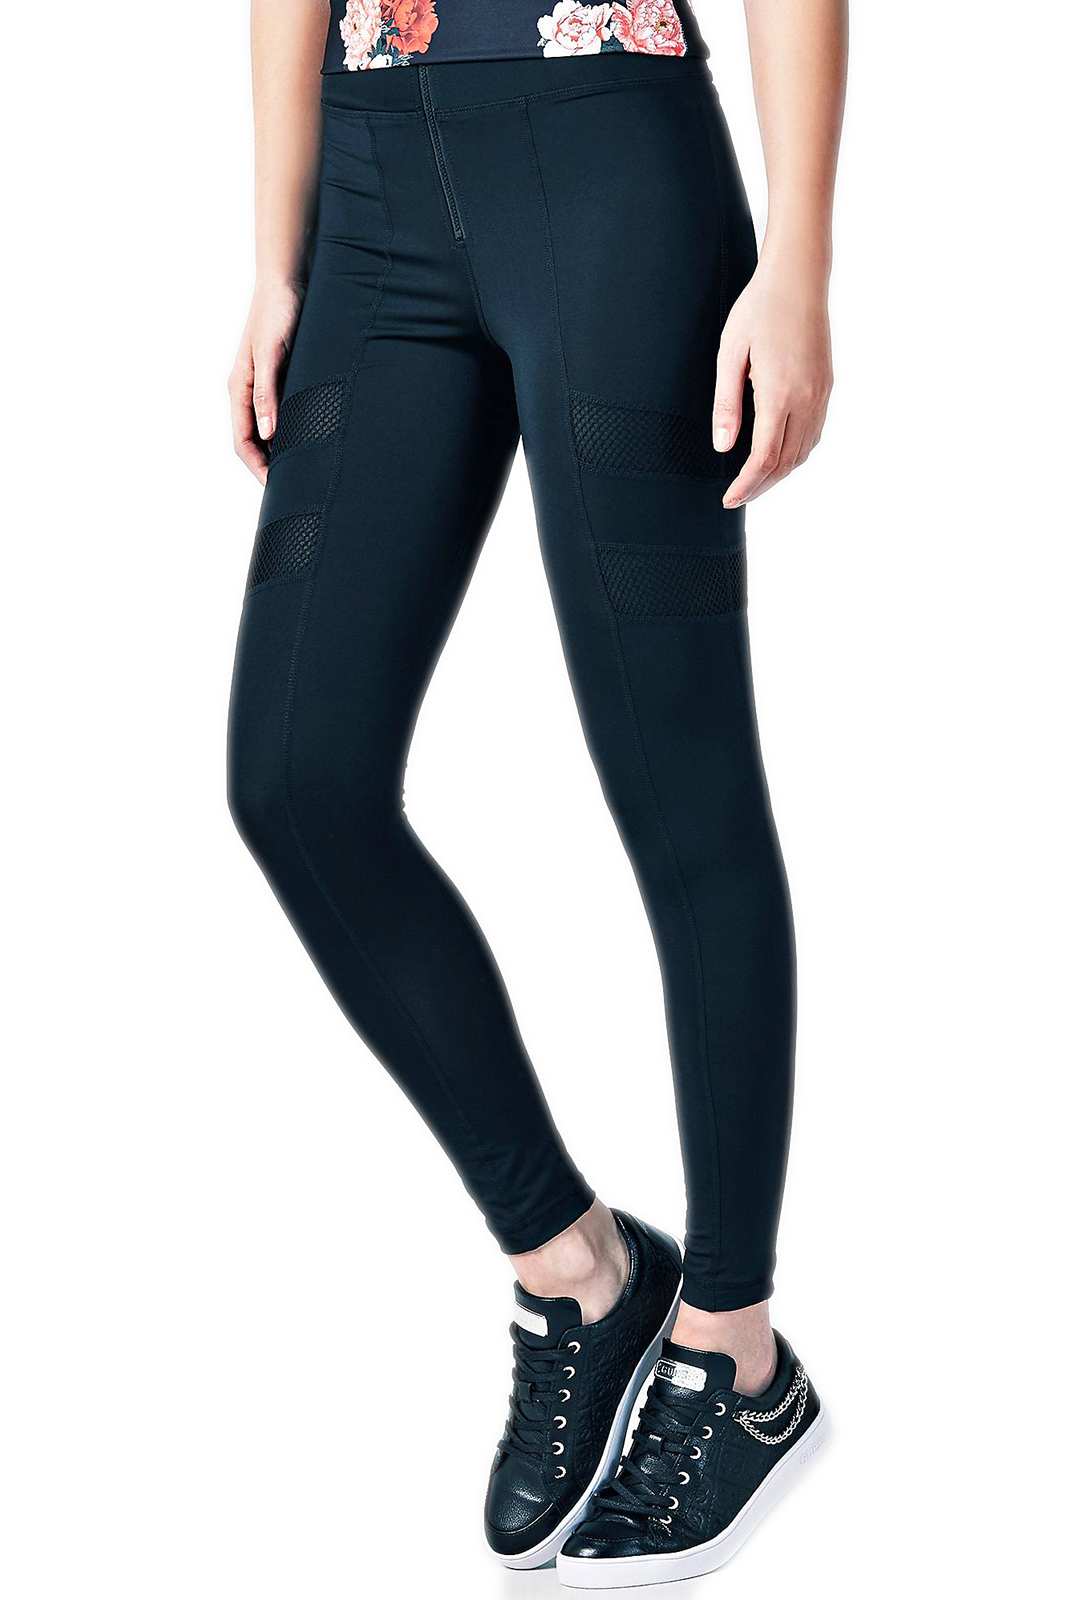 Legging sportwear slim noir femme - Guess O84a39 